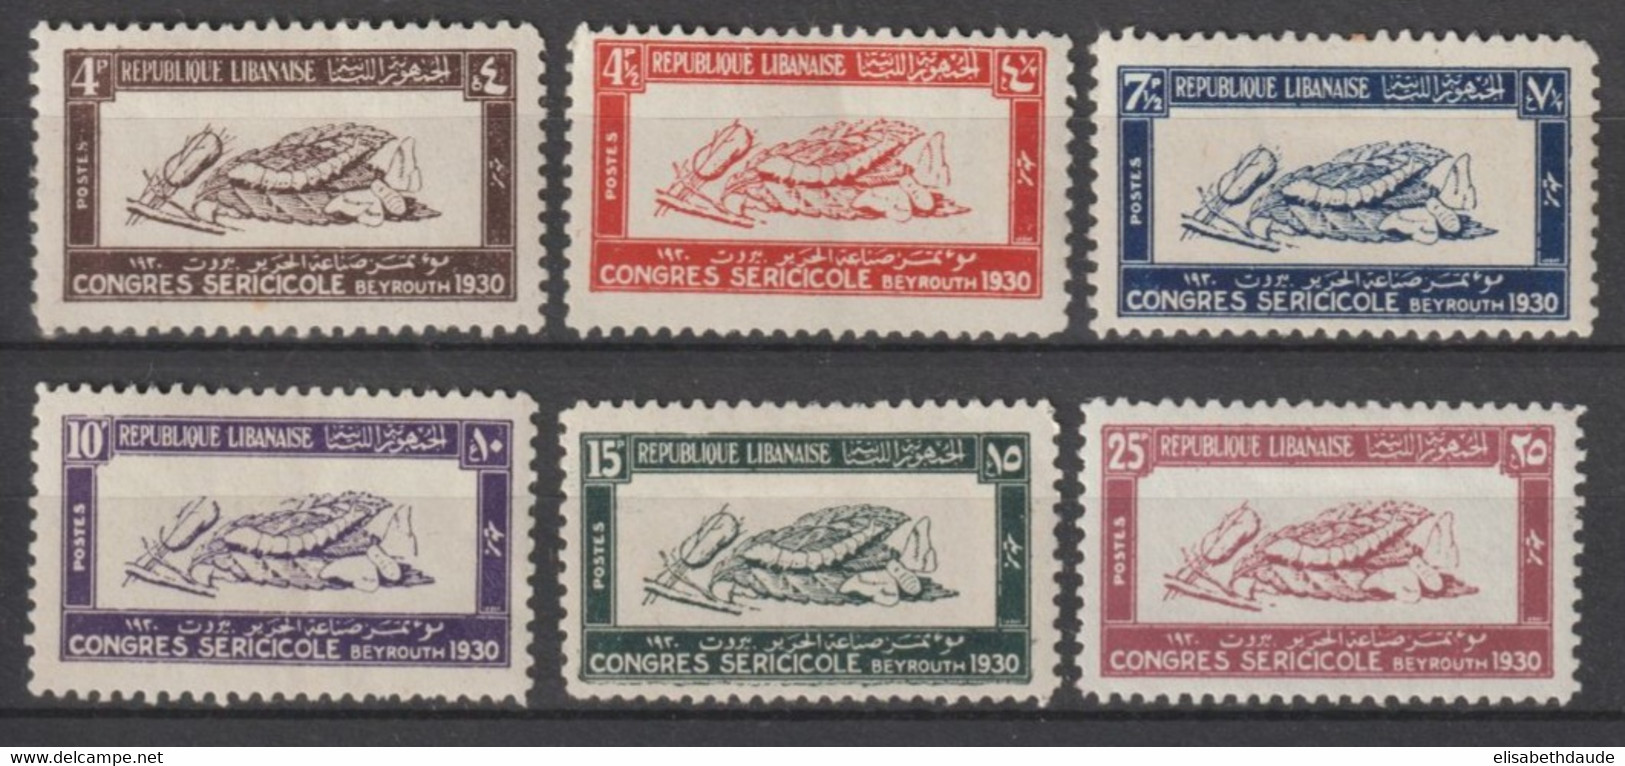 GRAND-LIBAN - 1930 - SERIE COMPLETE CONGRES SERICOLE - YVERT N°122/127 * MH - COTE = 104 EUR. - Neufs